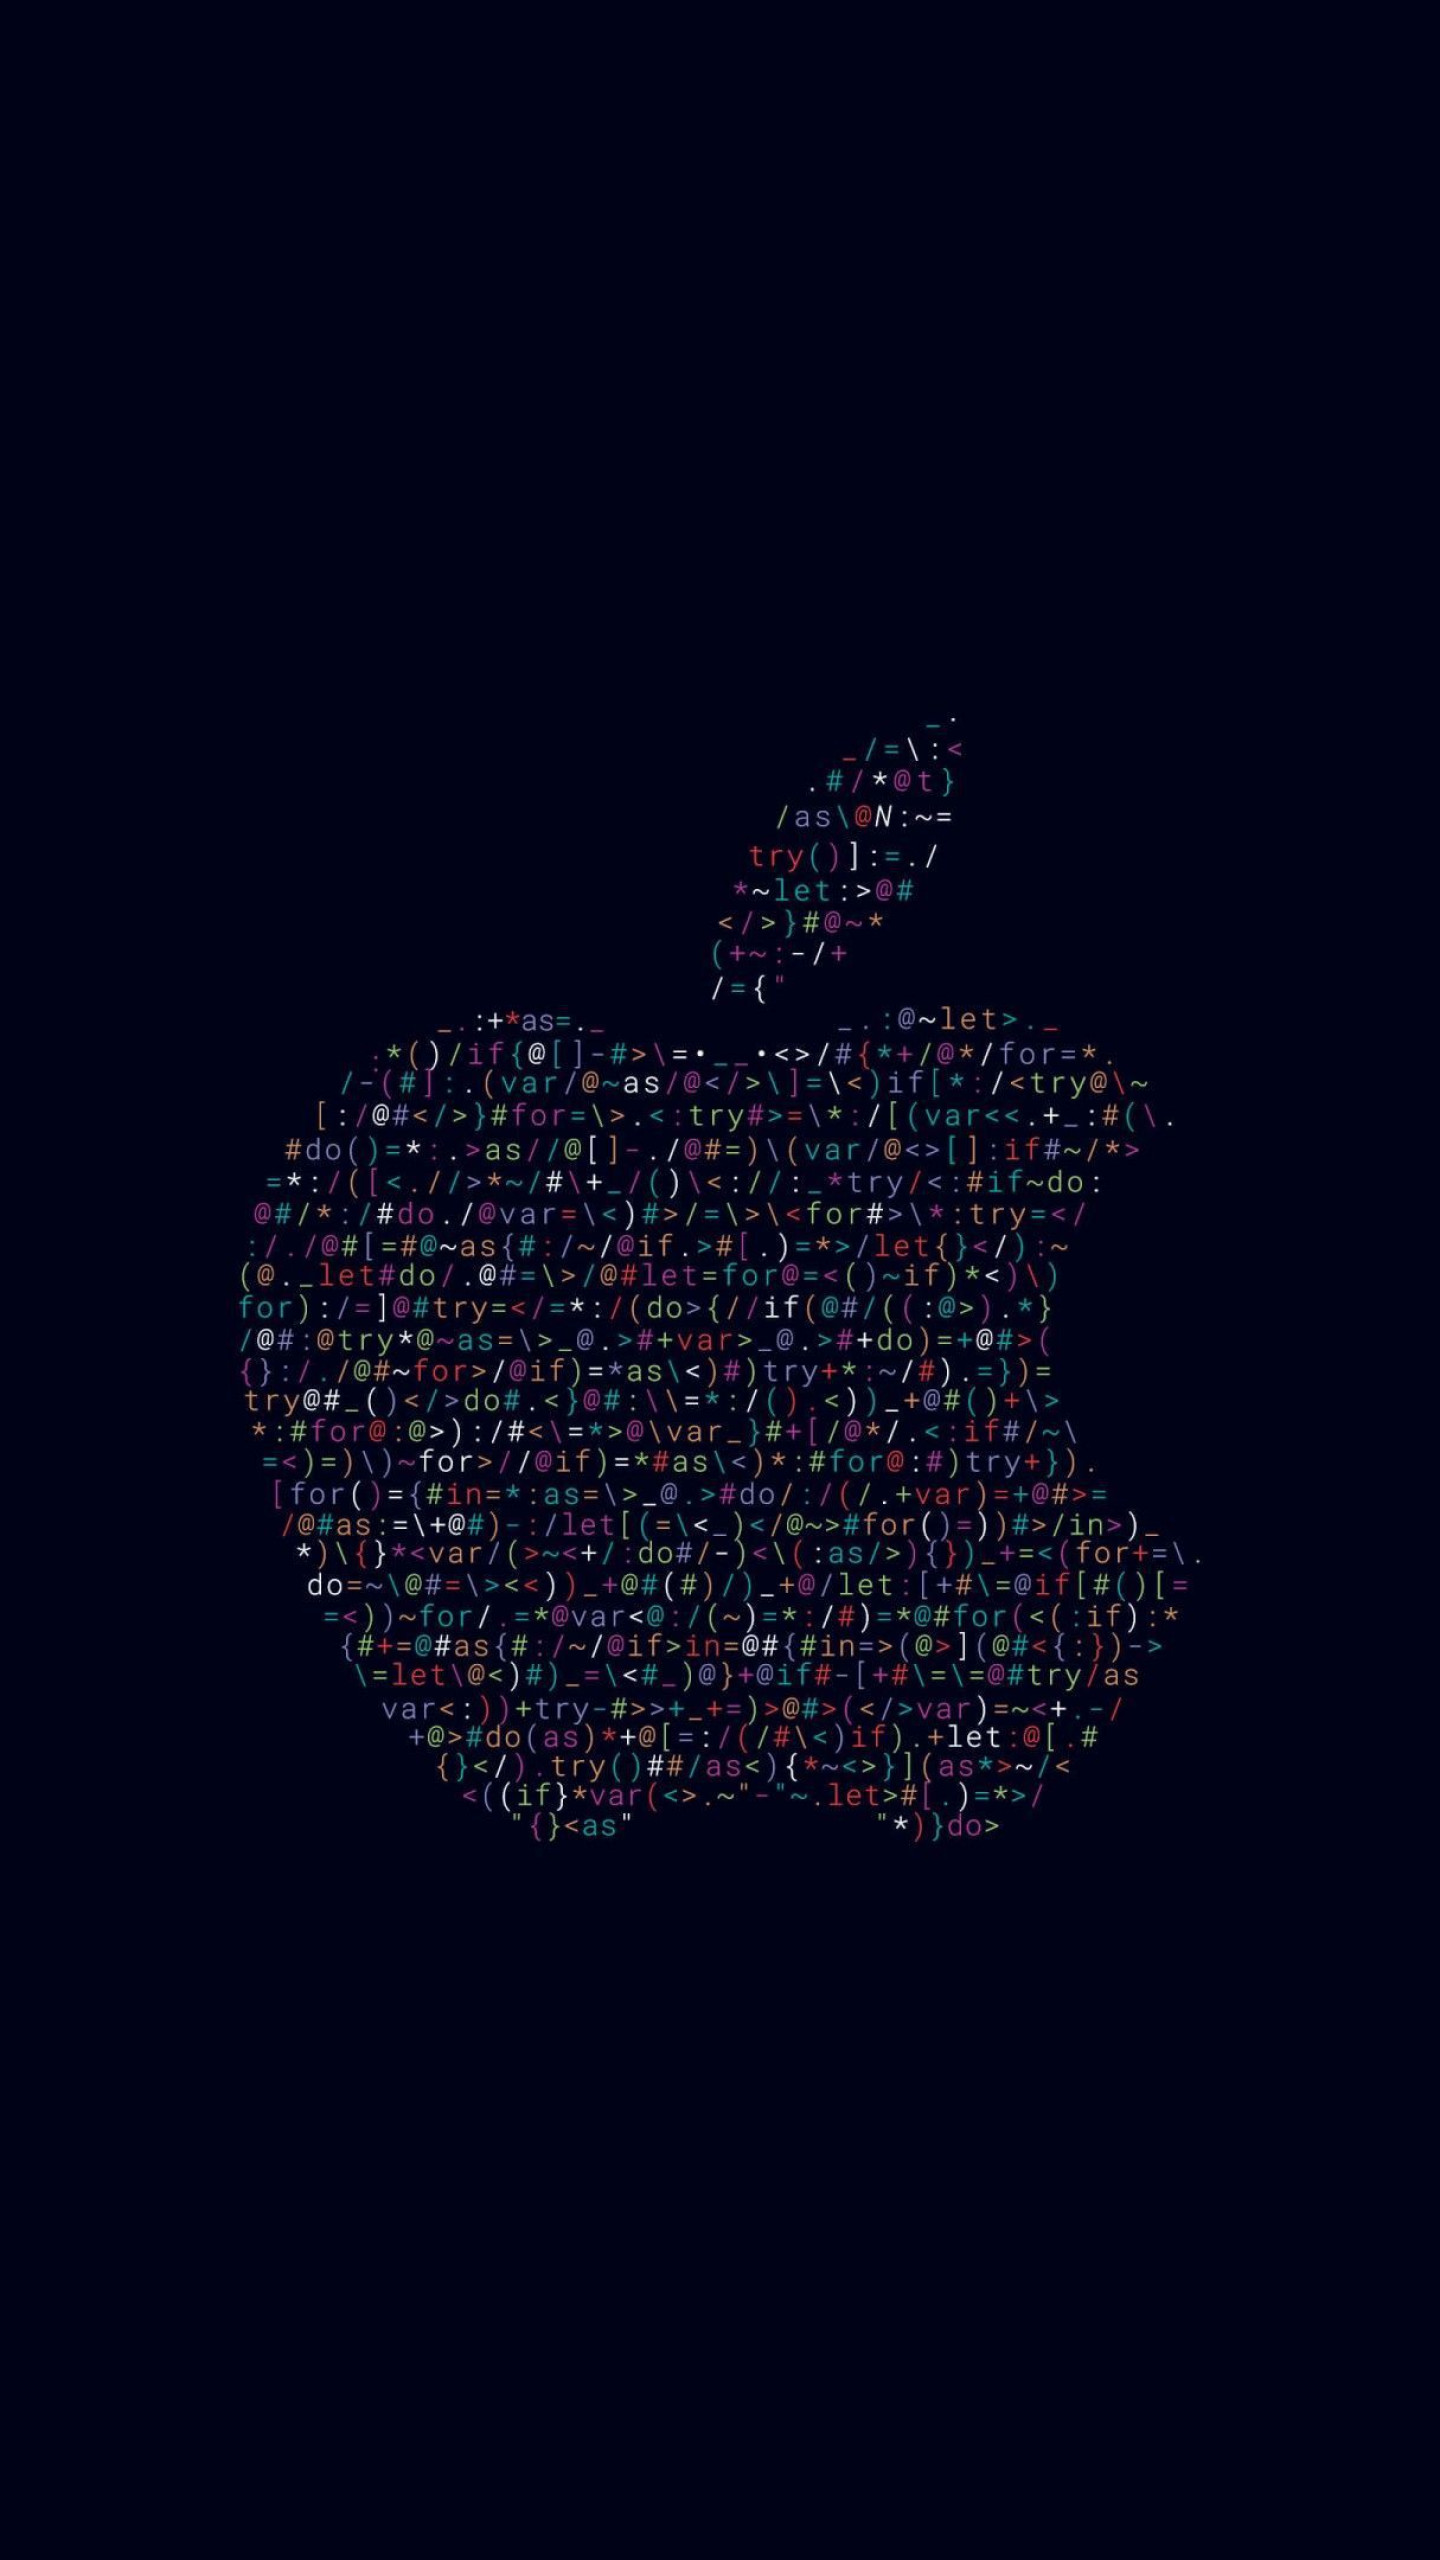 Wallpaper Apple Logo